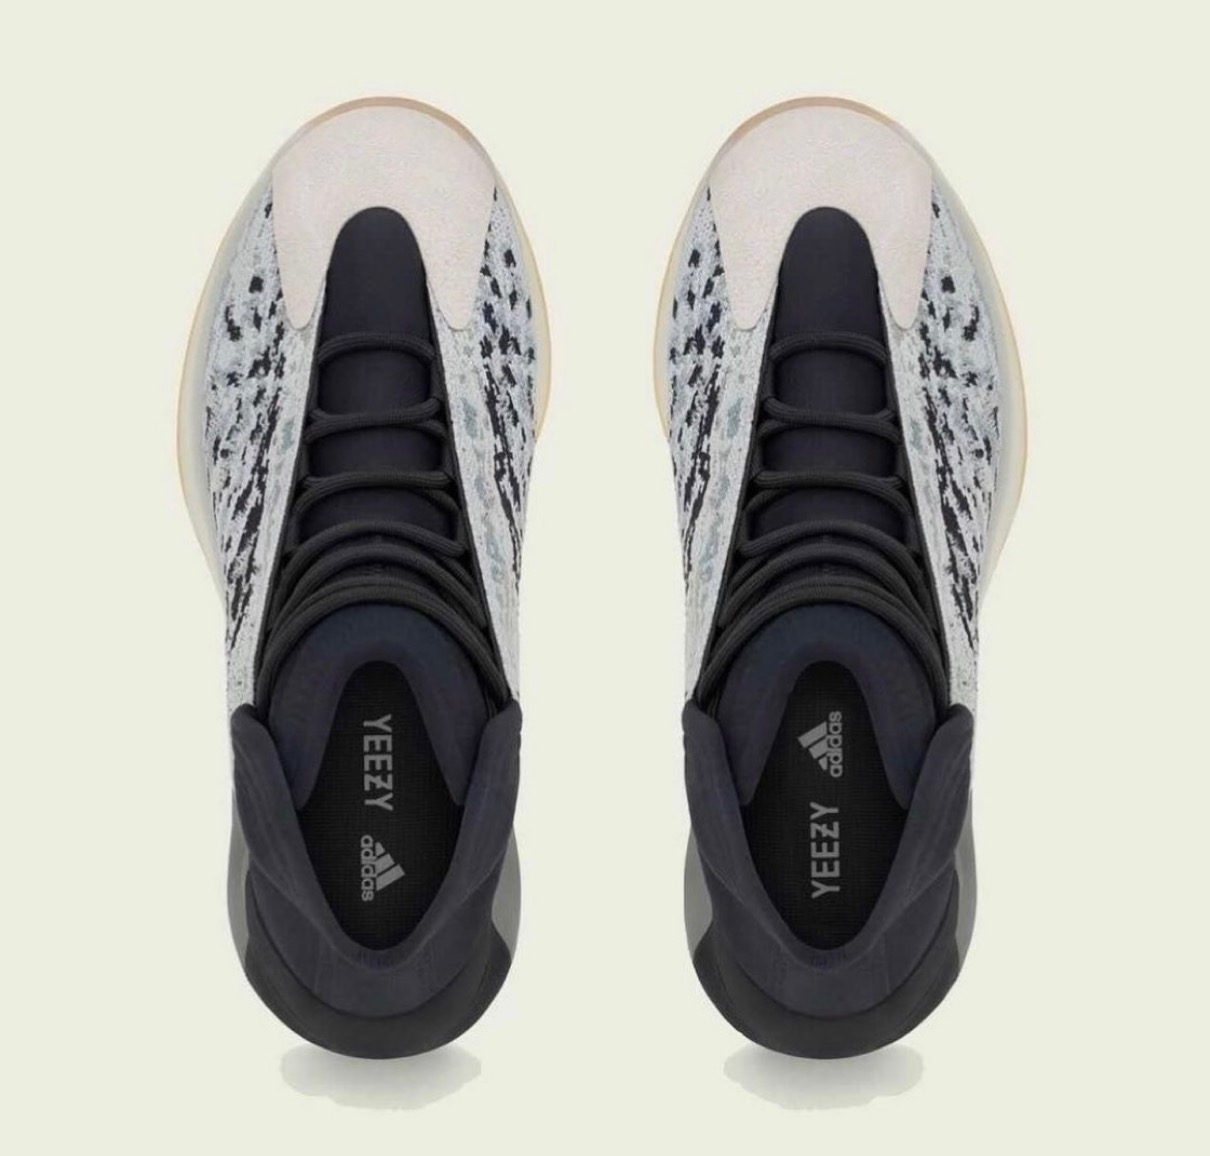 adidas】YEEZY QNTM “SEA TEAL”が国内2021年3月19日に発売予定 | UP TO